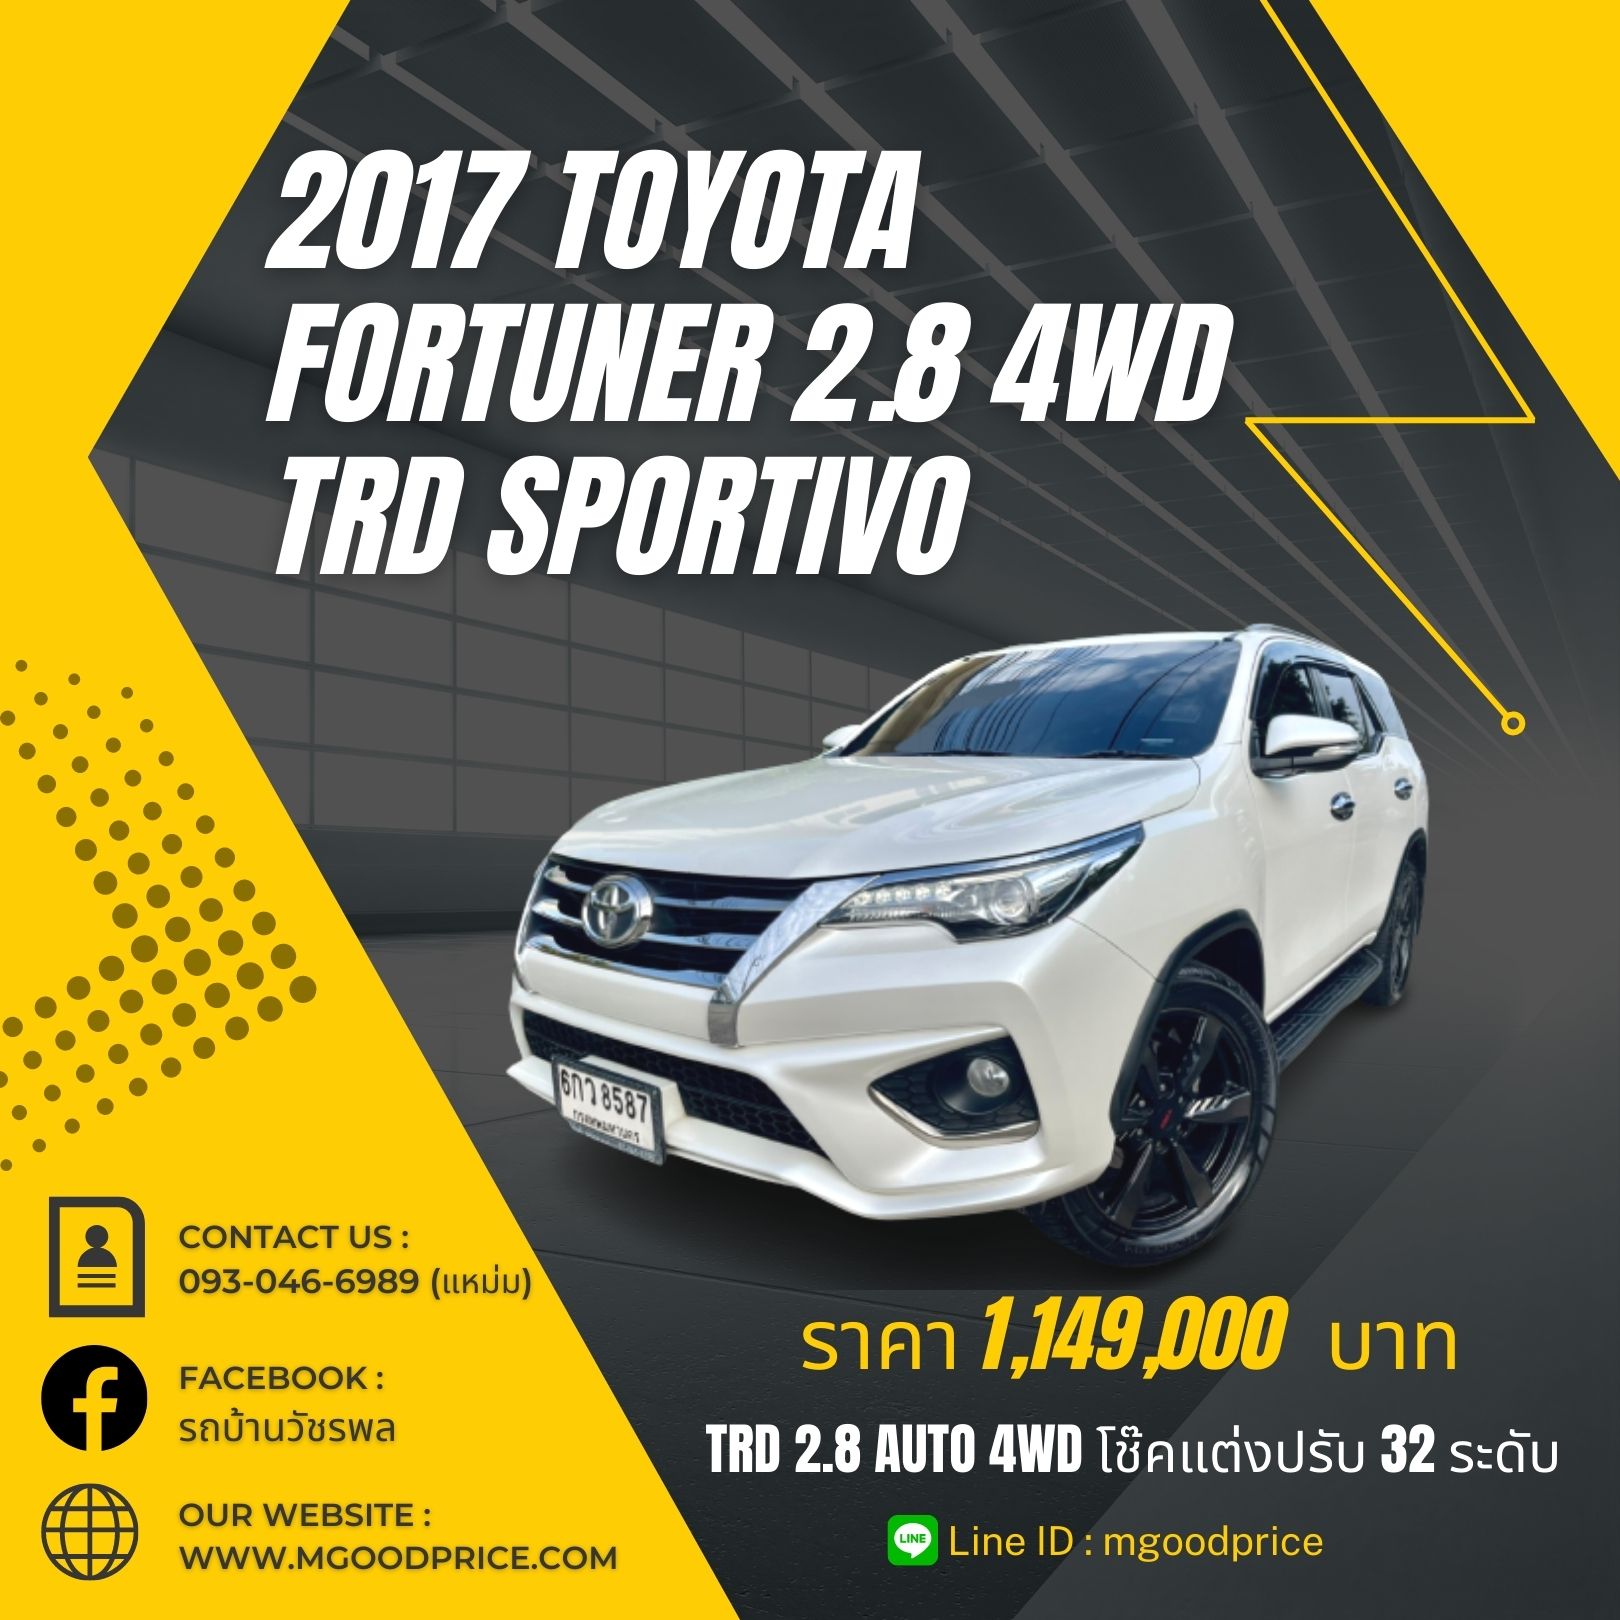 2017 TOYOTA FORTUNER, 2.8 4WD TRD SPORTIVO โฉม ปี15-ปัจจุบัน